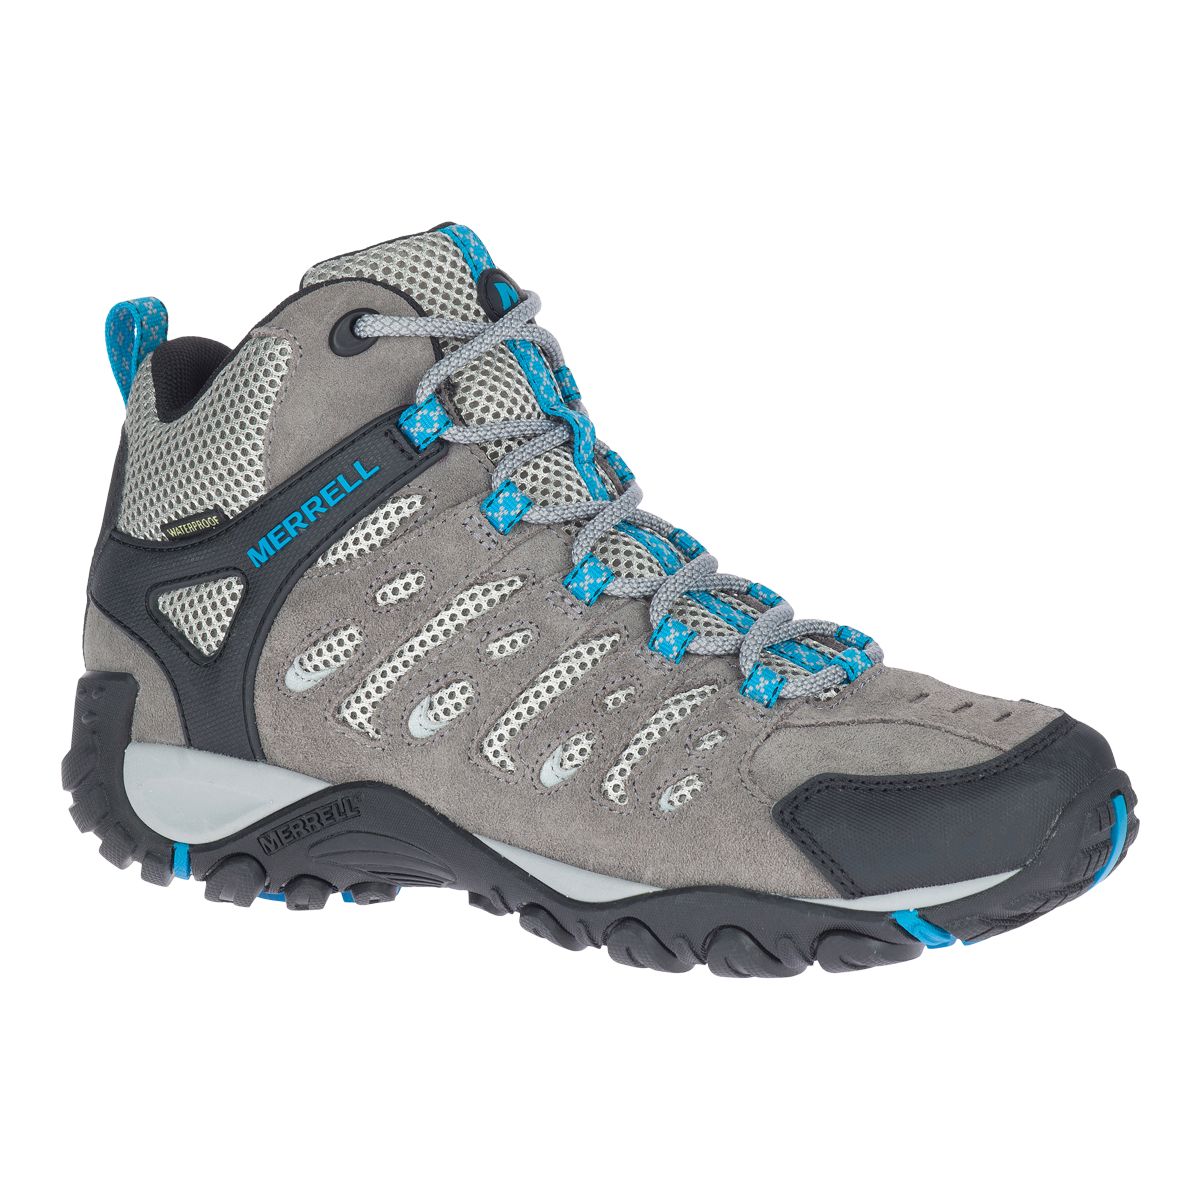 Merrell Bravada Mid J002506 Gray White Hiking Shoes Boots Women's Sz 10.5